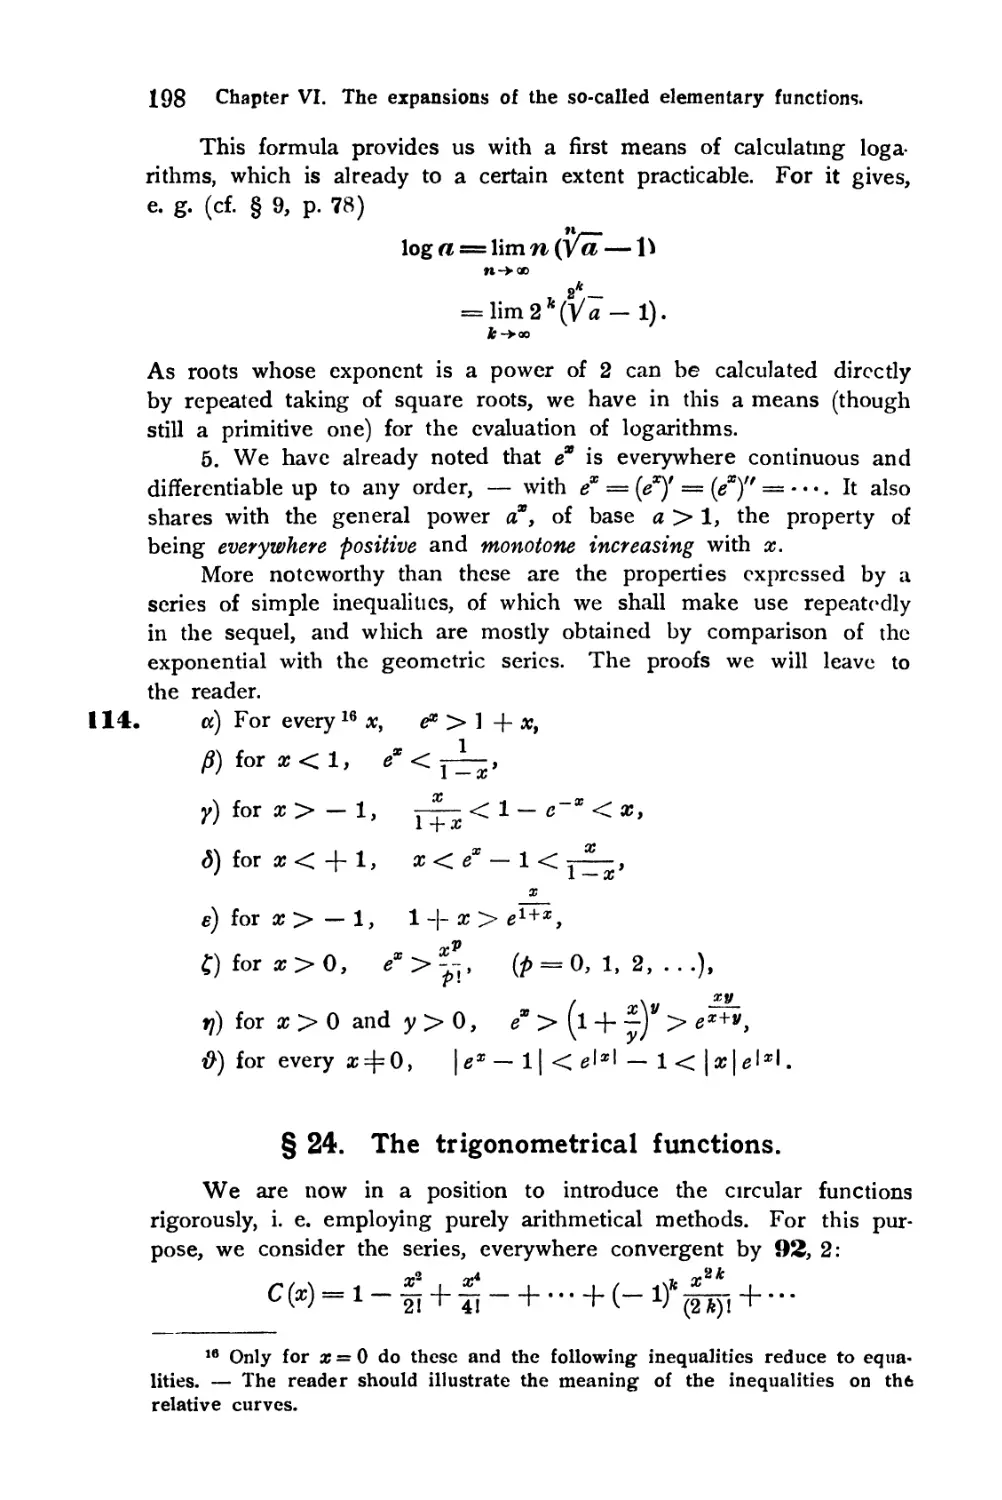 § 24. The trigonometrical functions